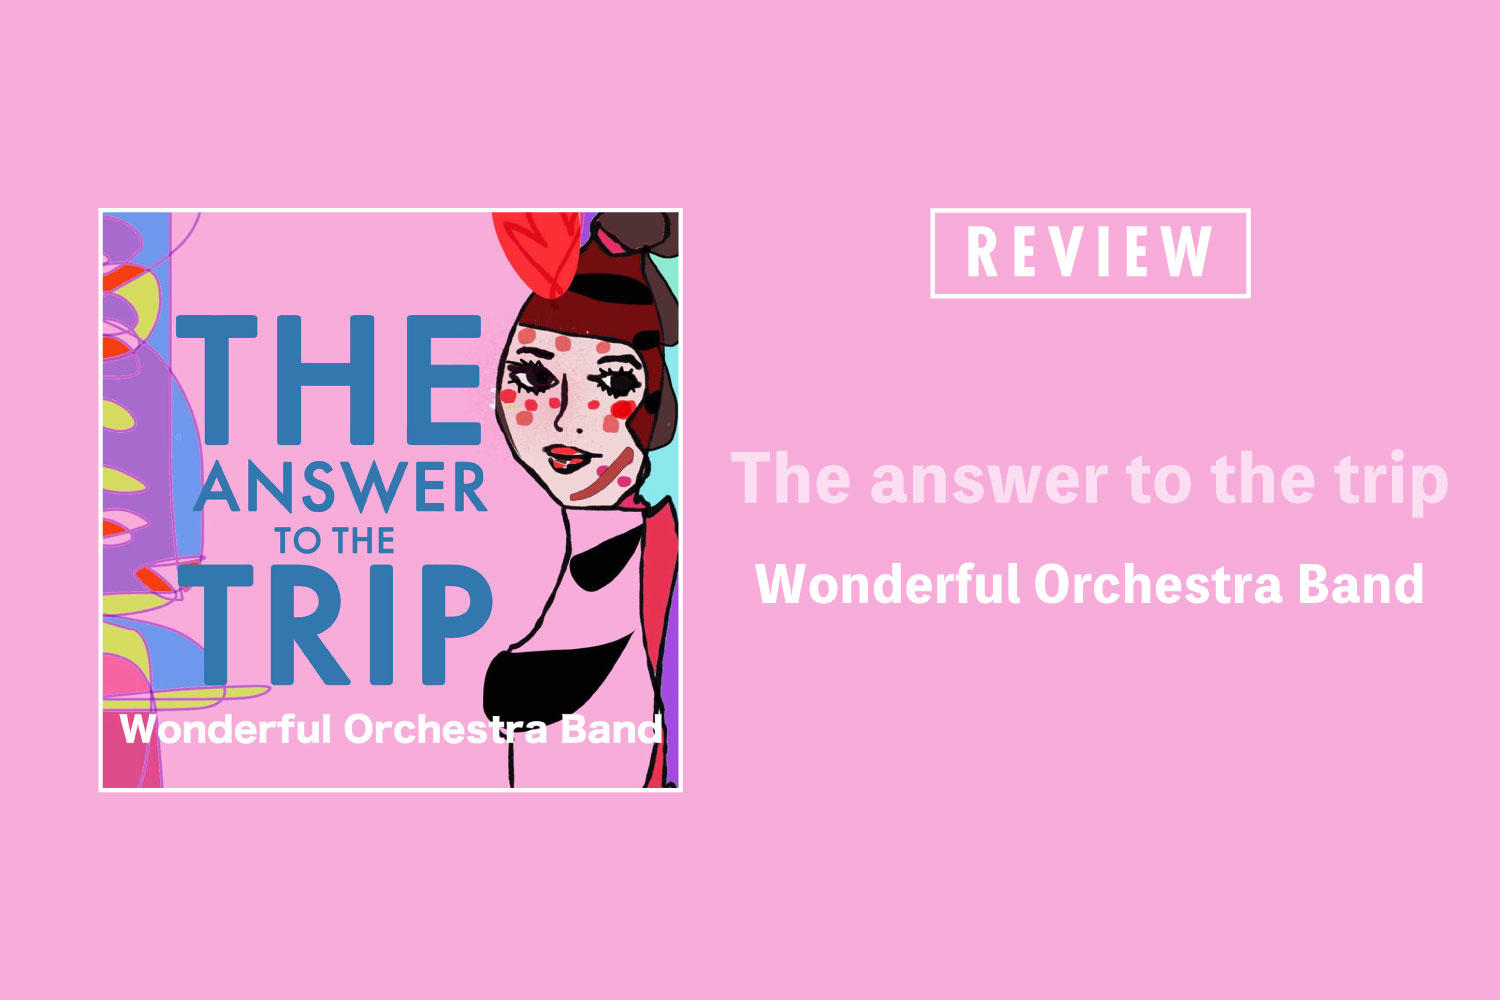 Wonderful Orchestra Band「The answer to the trip」──街のいちばんワルな先輩だけが知っている、最高にお洒落な音楽